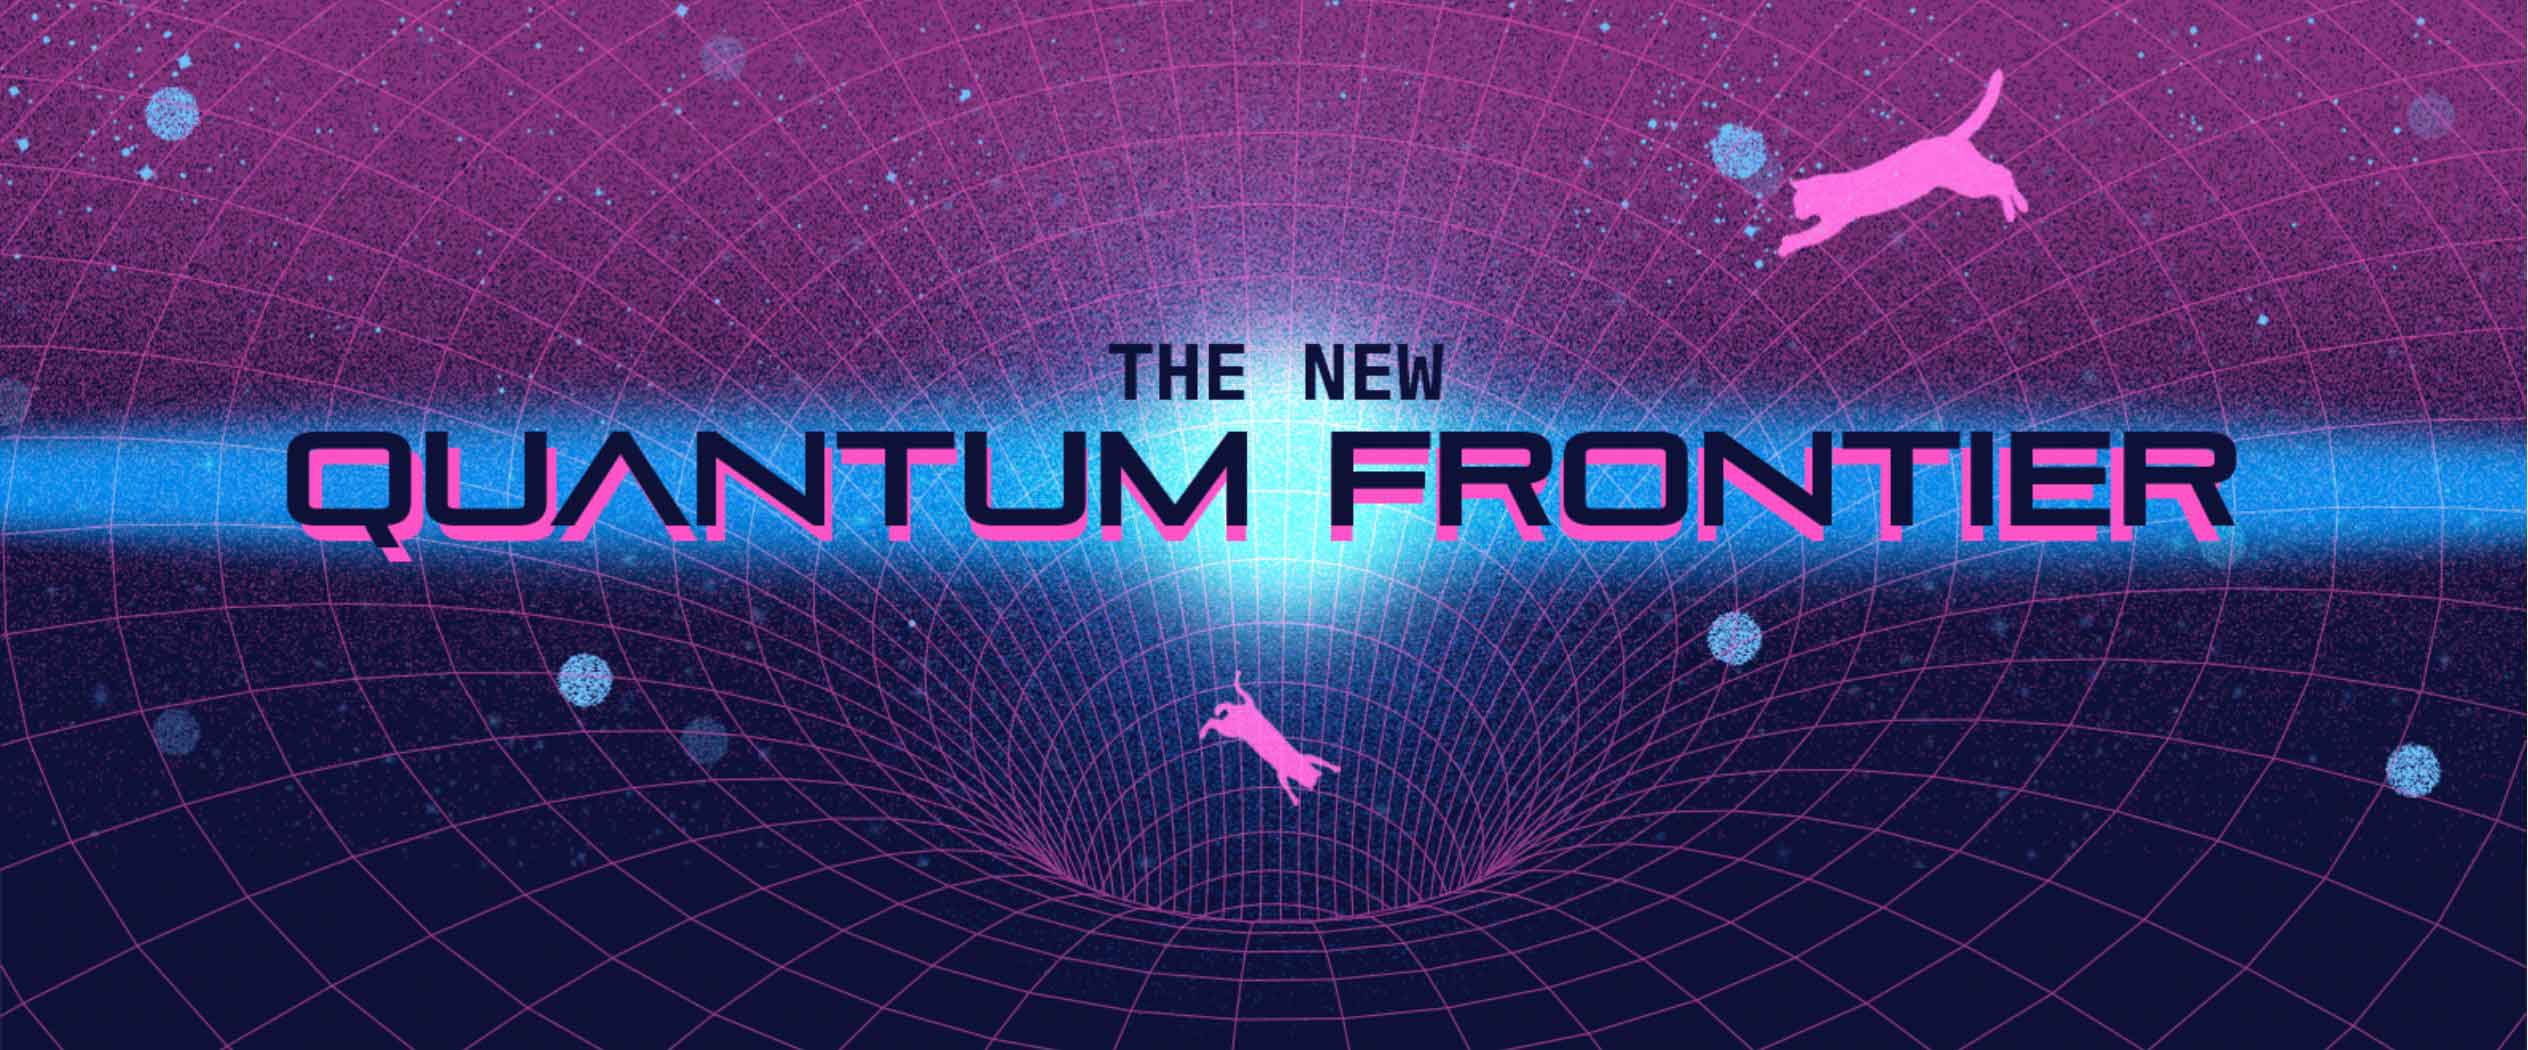 The New Quantum Frontier